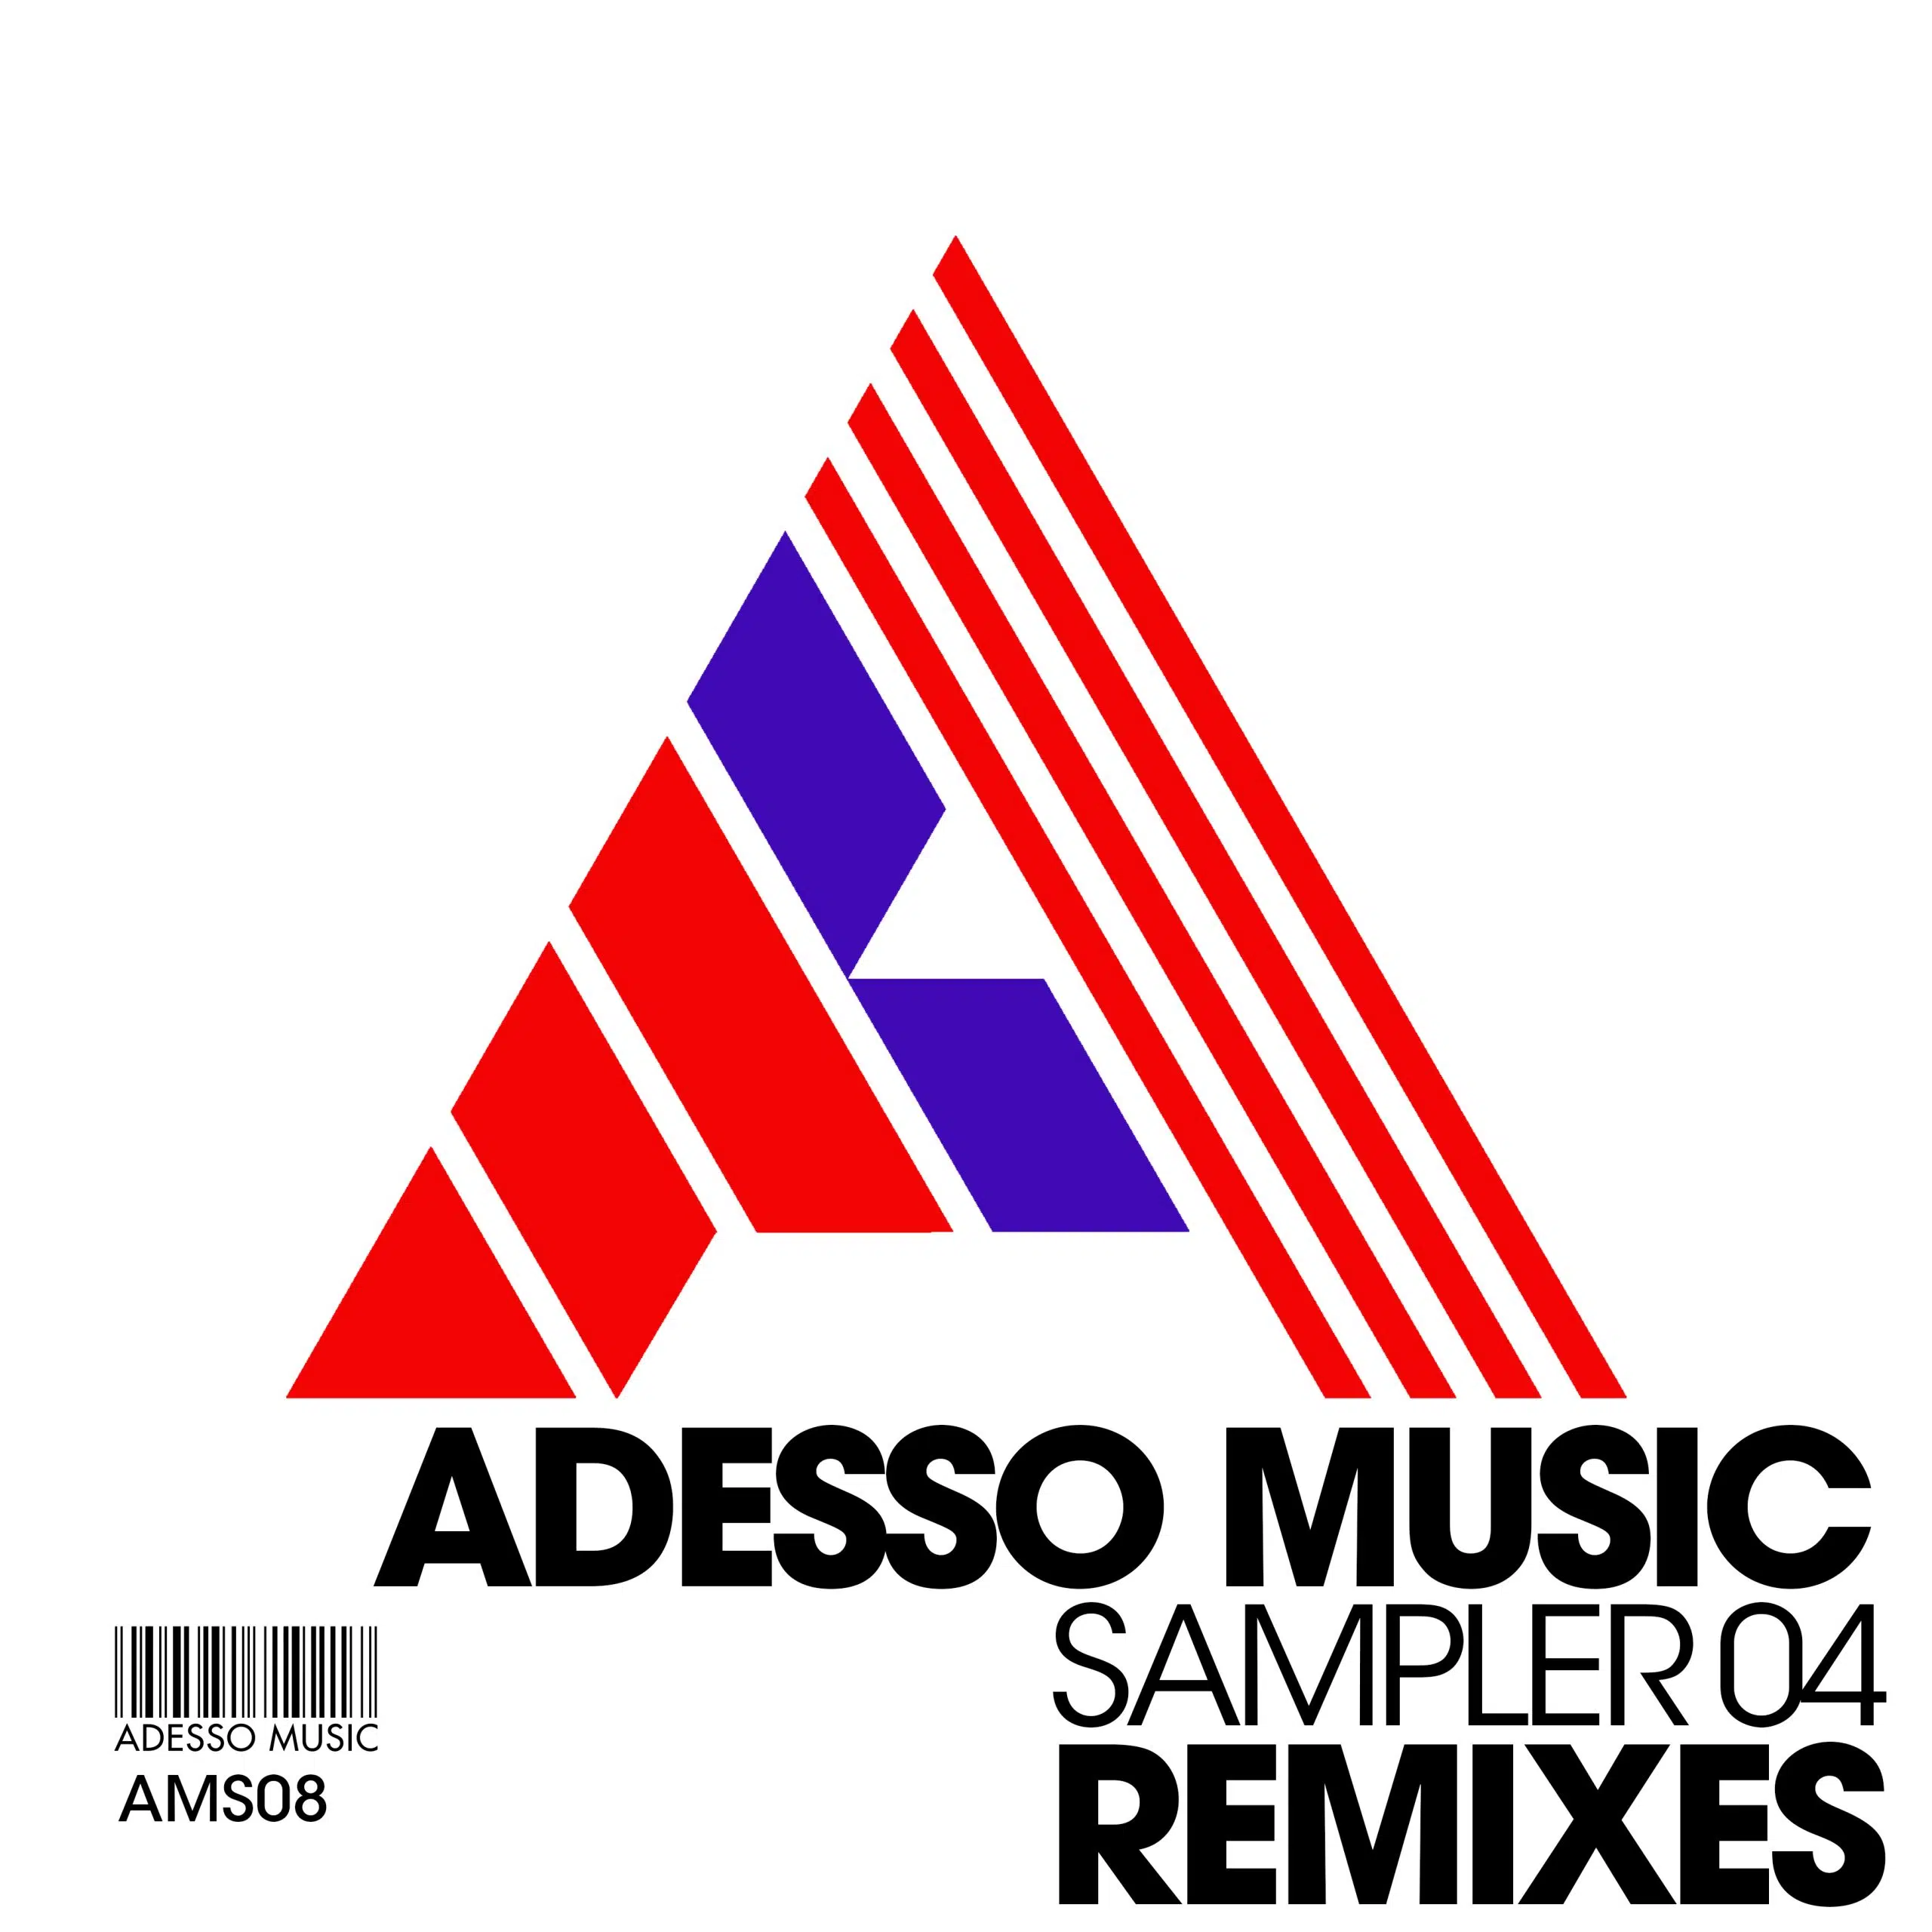 Adesso Music Sampler 04 Remixes